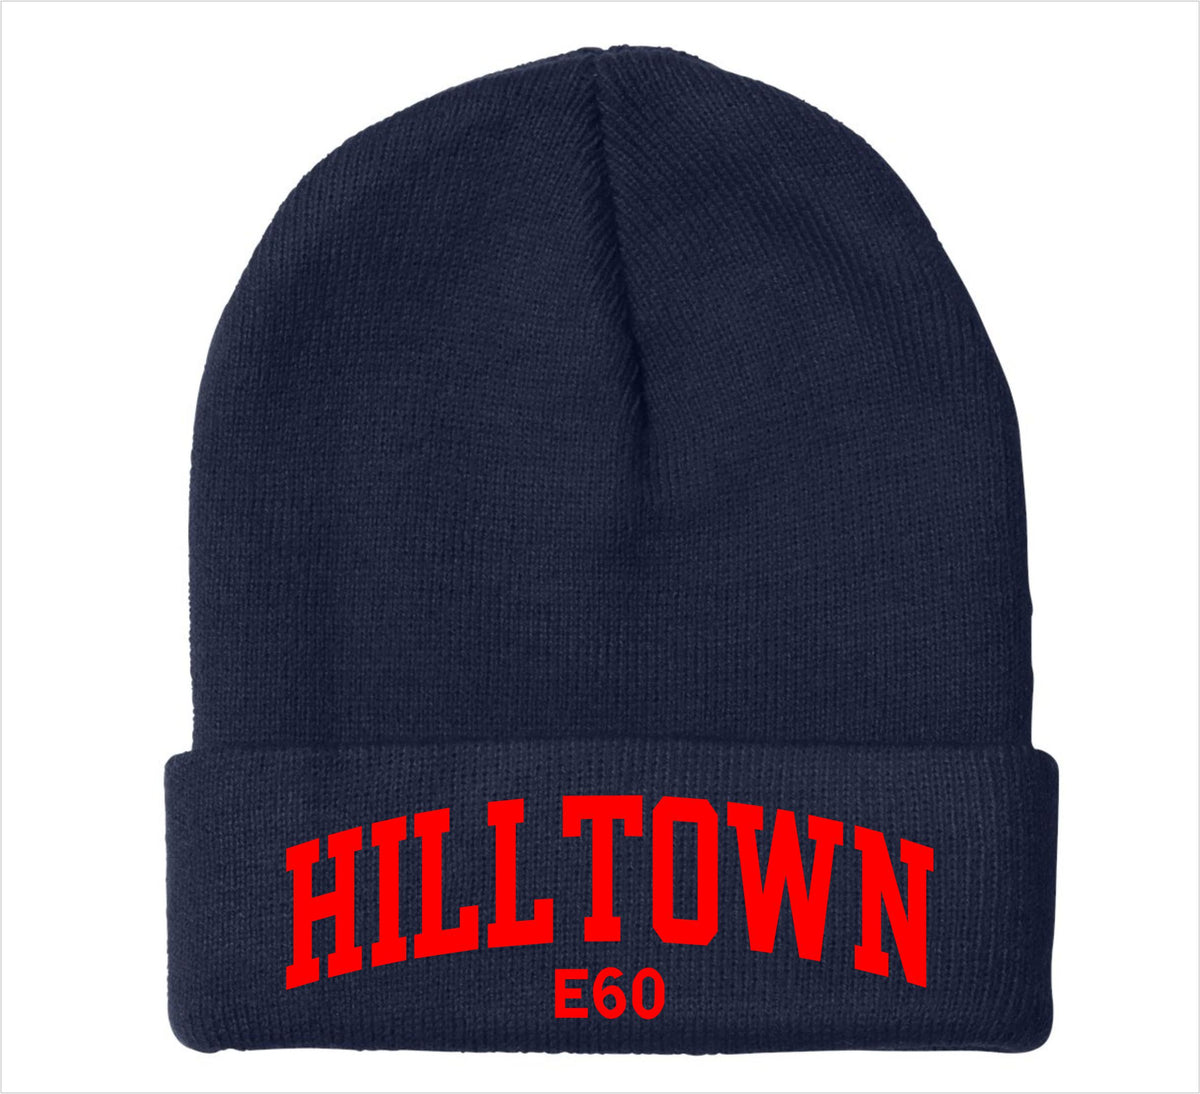 Hilltown E60 Customer Embroidered Winter Hat